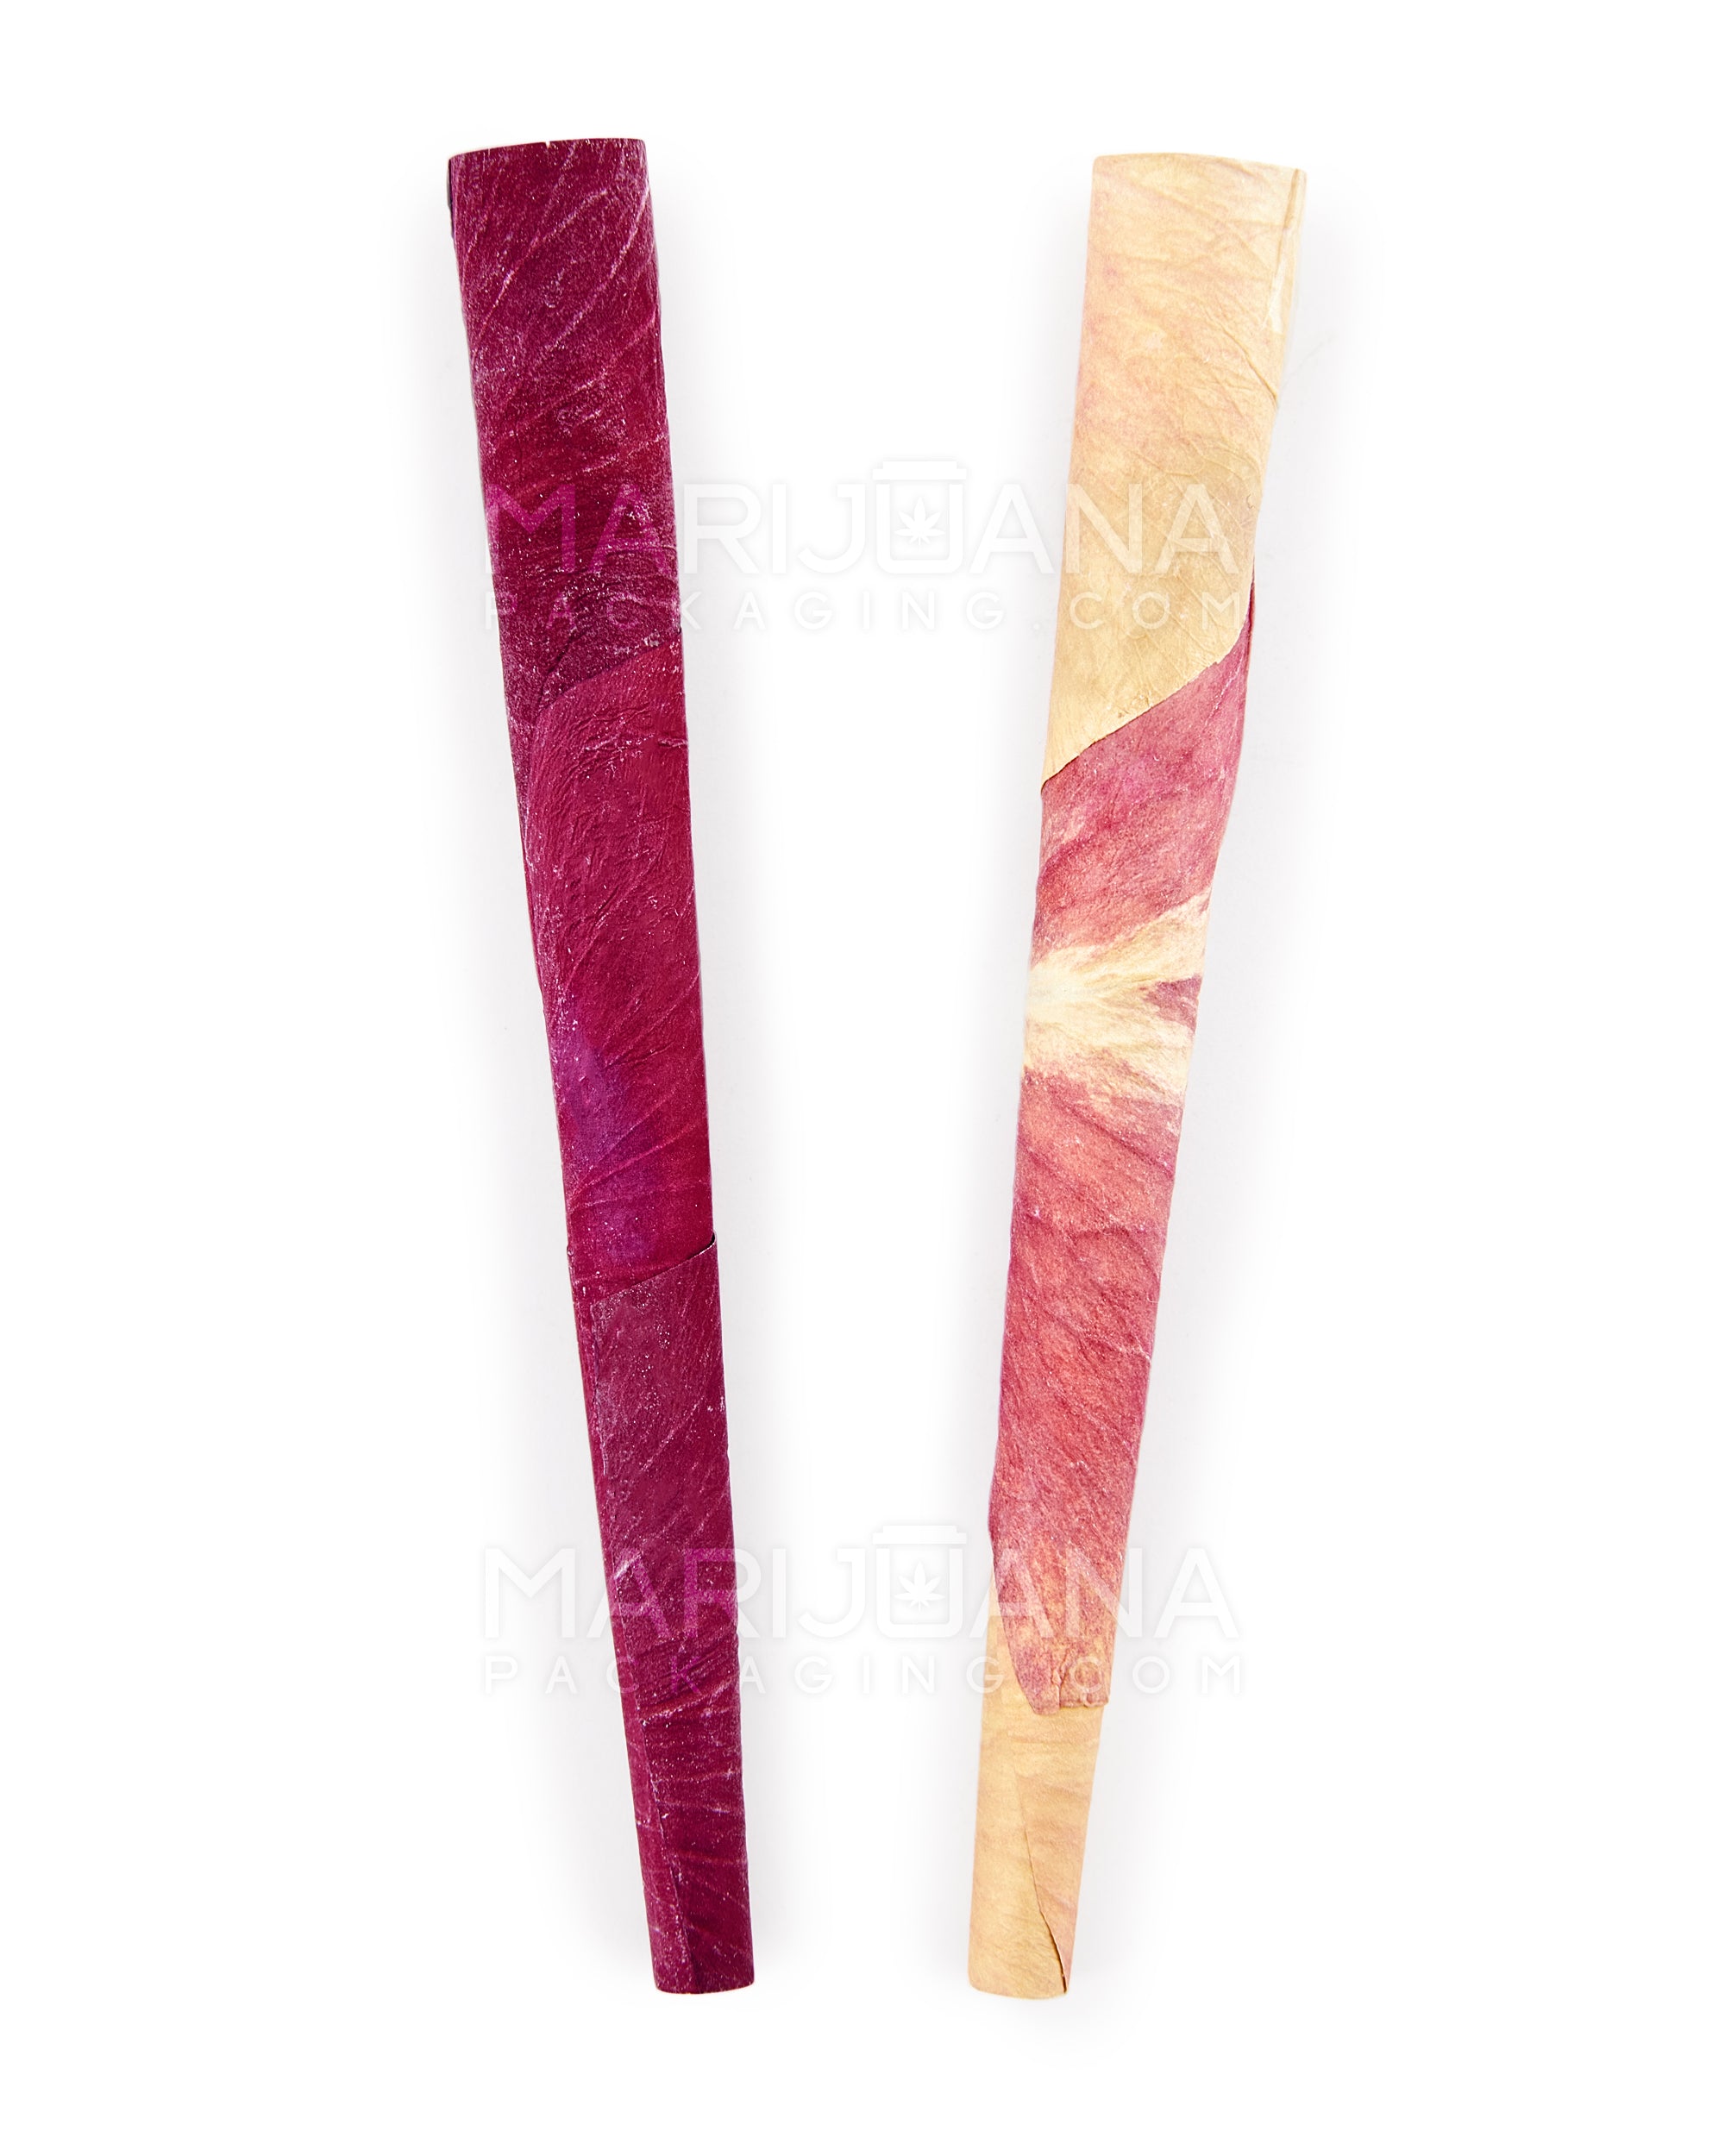 PETALS | 'Retail Display' Organic Rose Petal King Size Pre-Rolled Cones | 109mm - Organic Rose Paper - 24 Count - 4